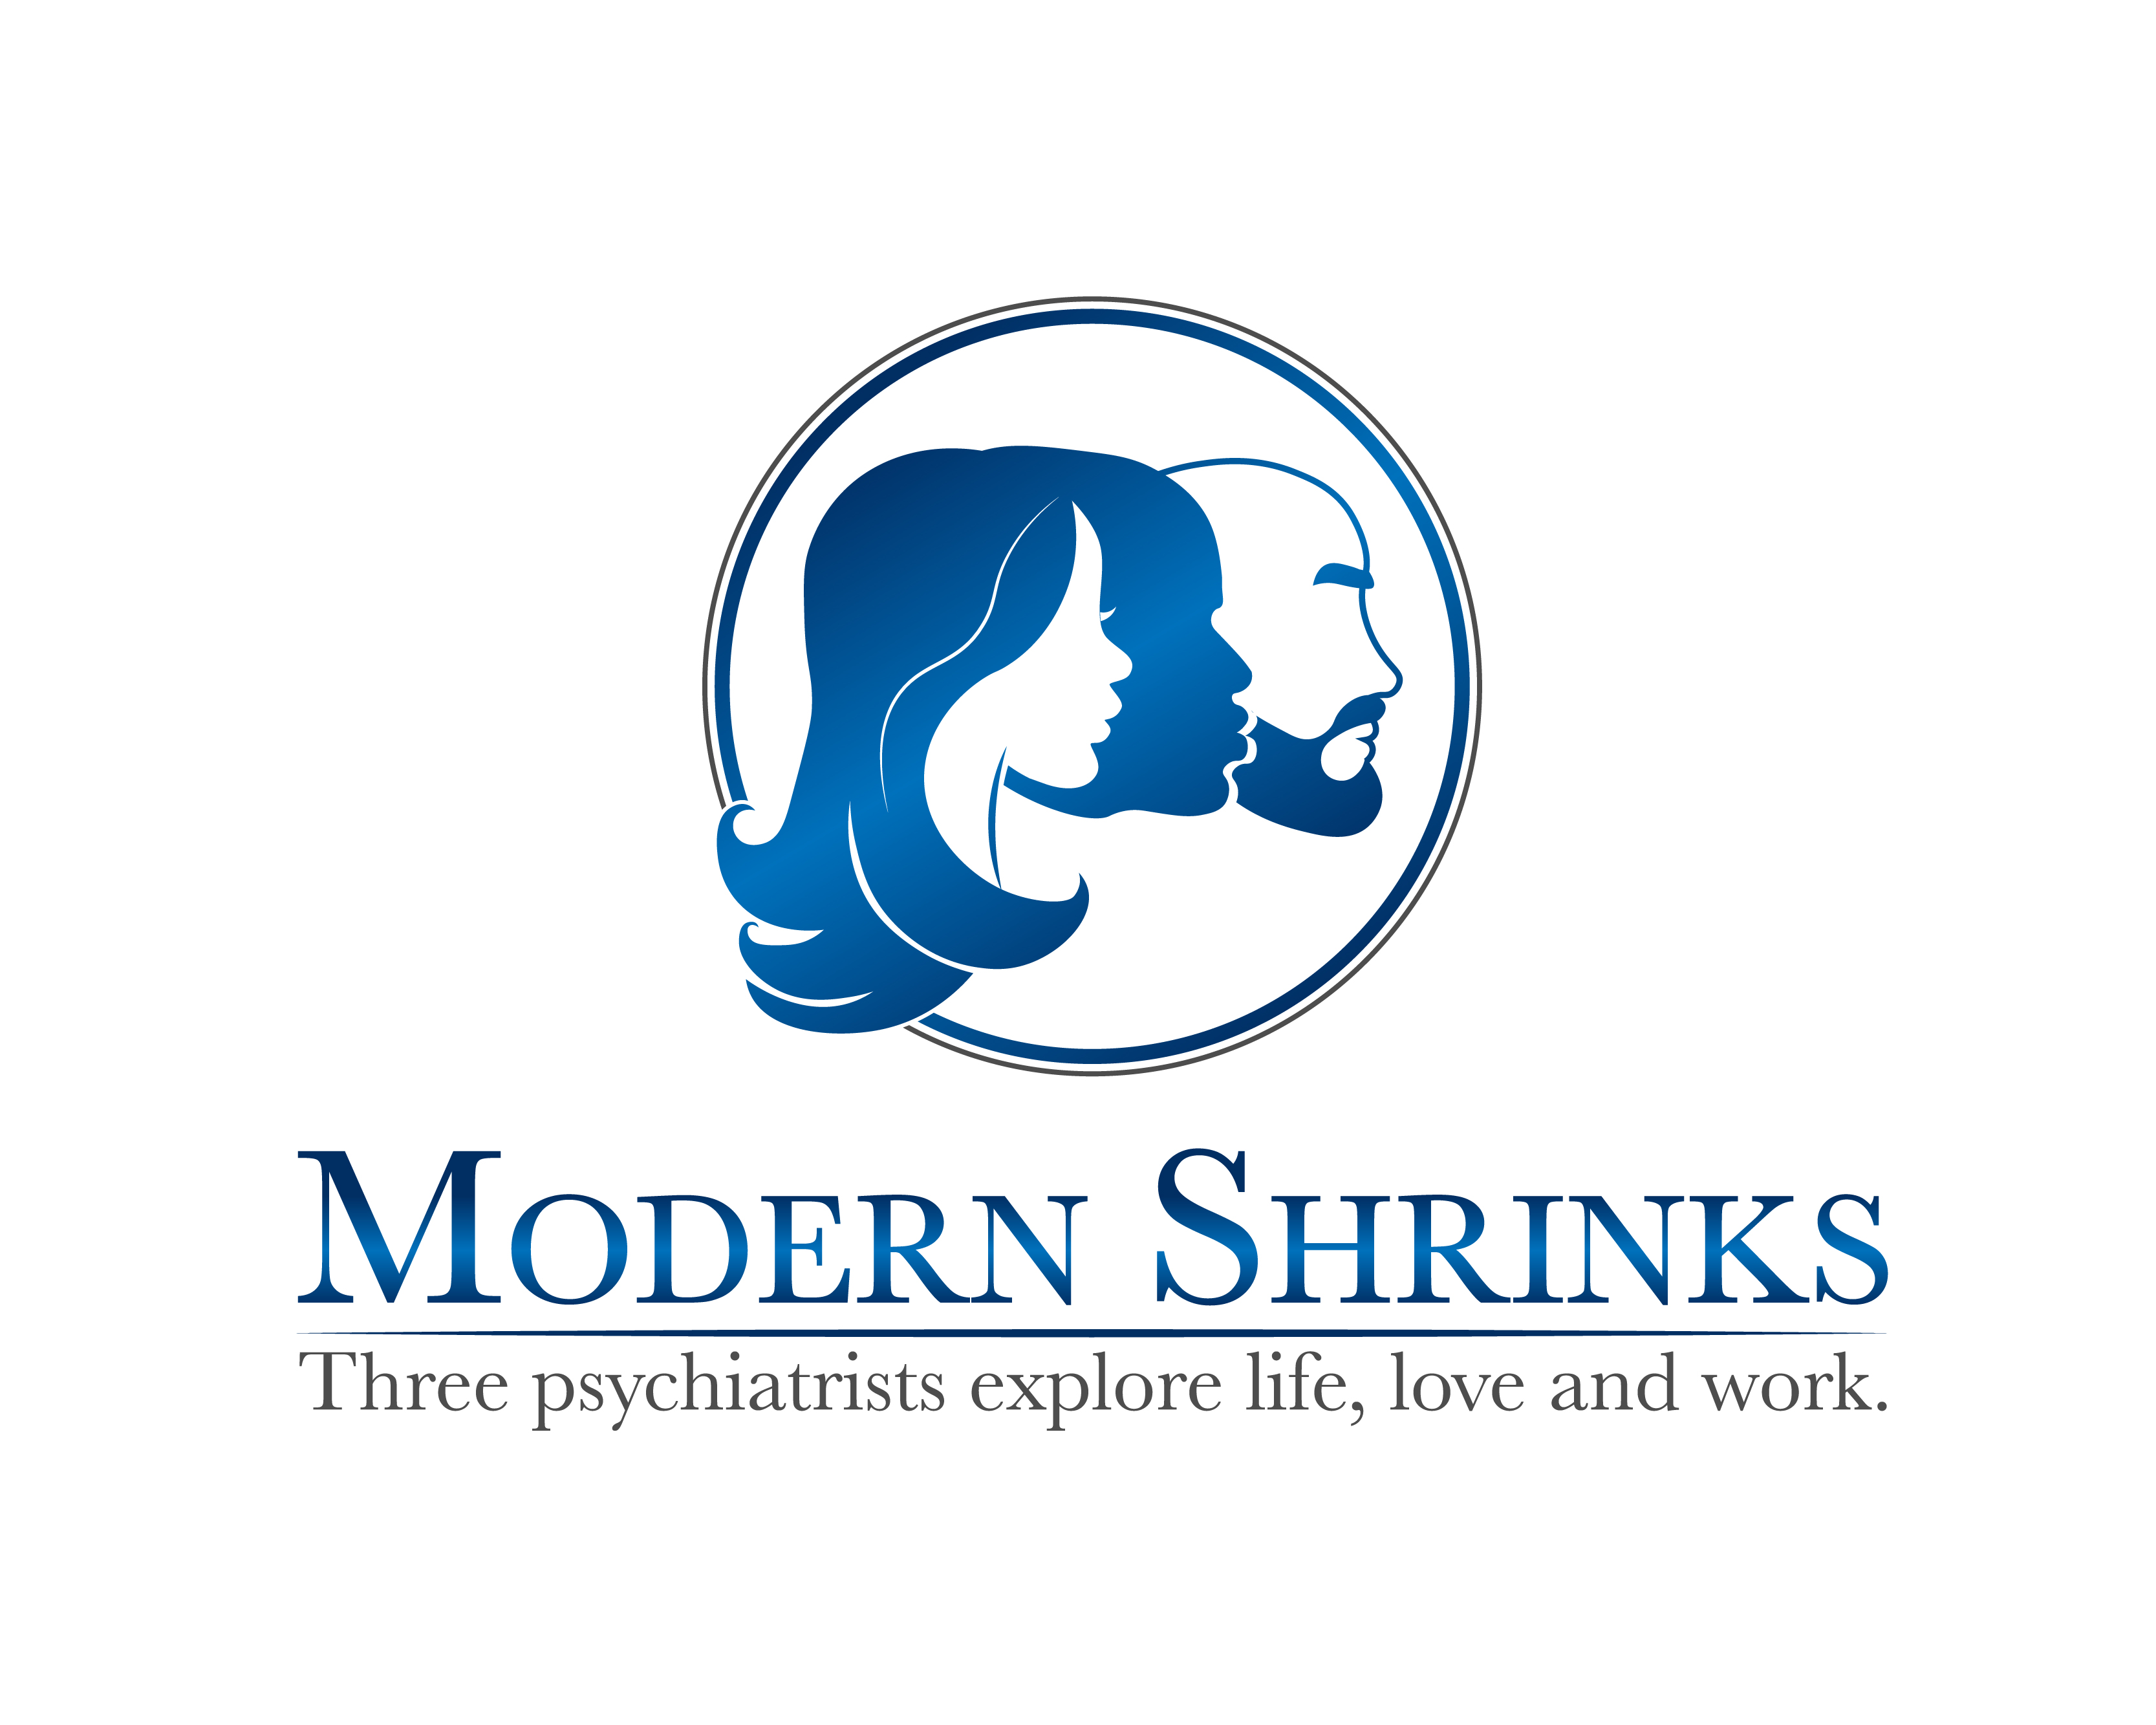 Logo Design Entry 1533028 submitted by Benovic to the contest for Modern Shrinks vs. The Modern Shrinks Podcast run by ModernShrinks